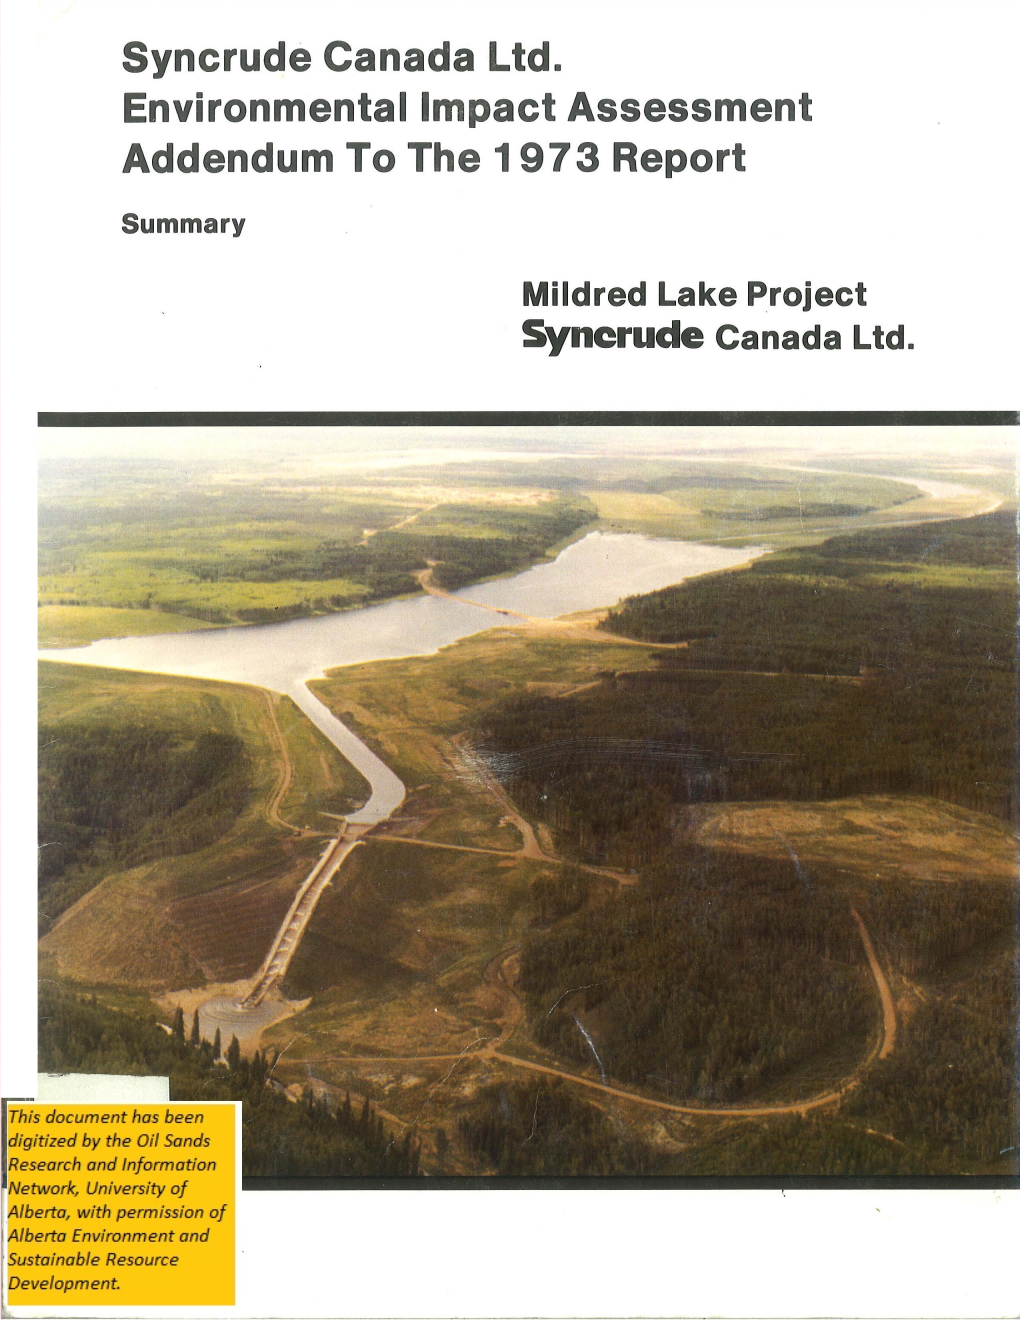 Syncrude Canada Ltd. Environmental Impact Assessment Addendum to the 1973 Report